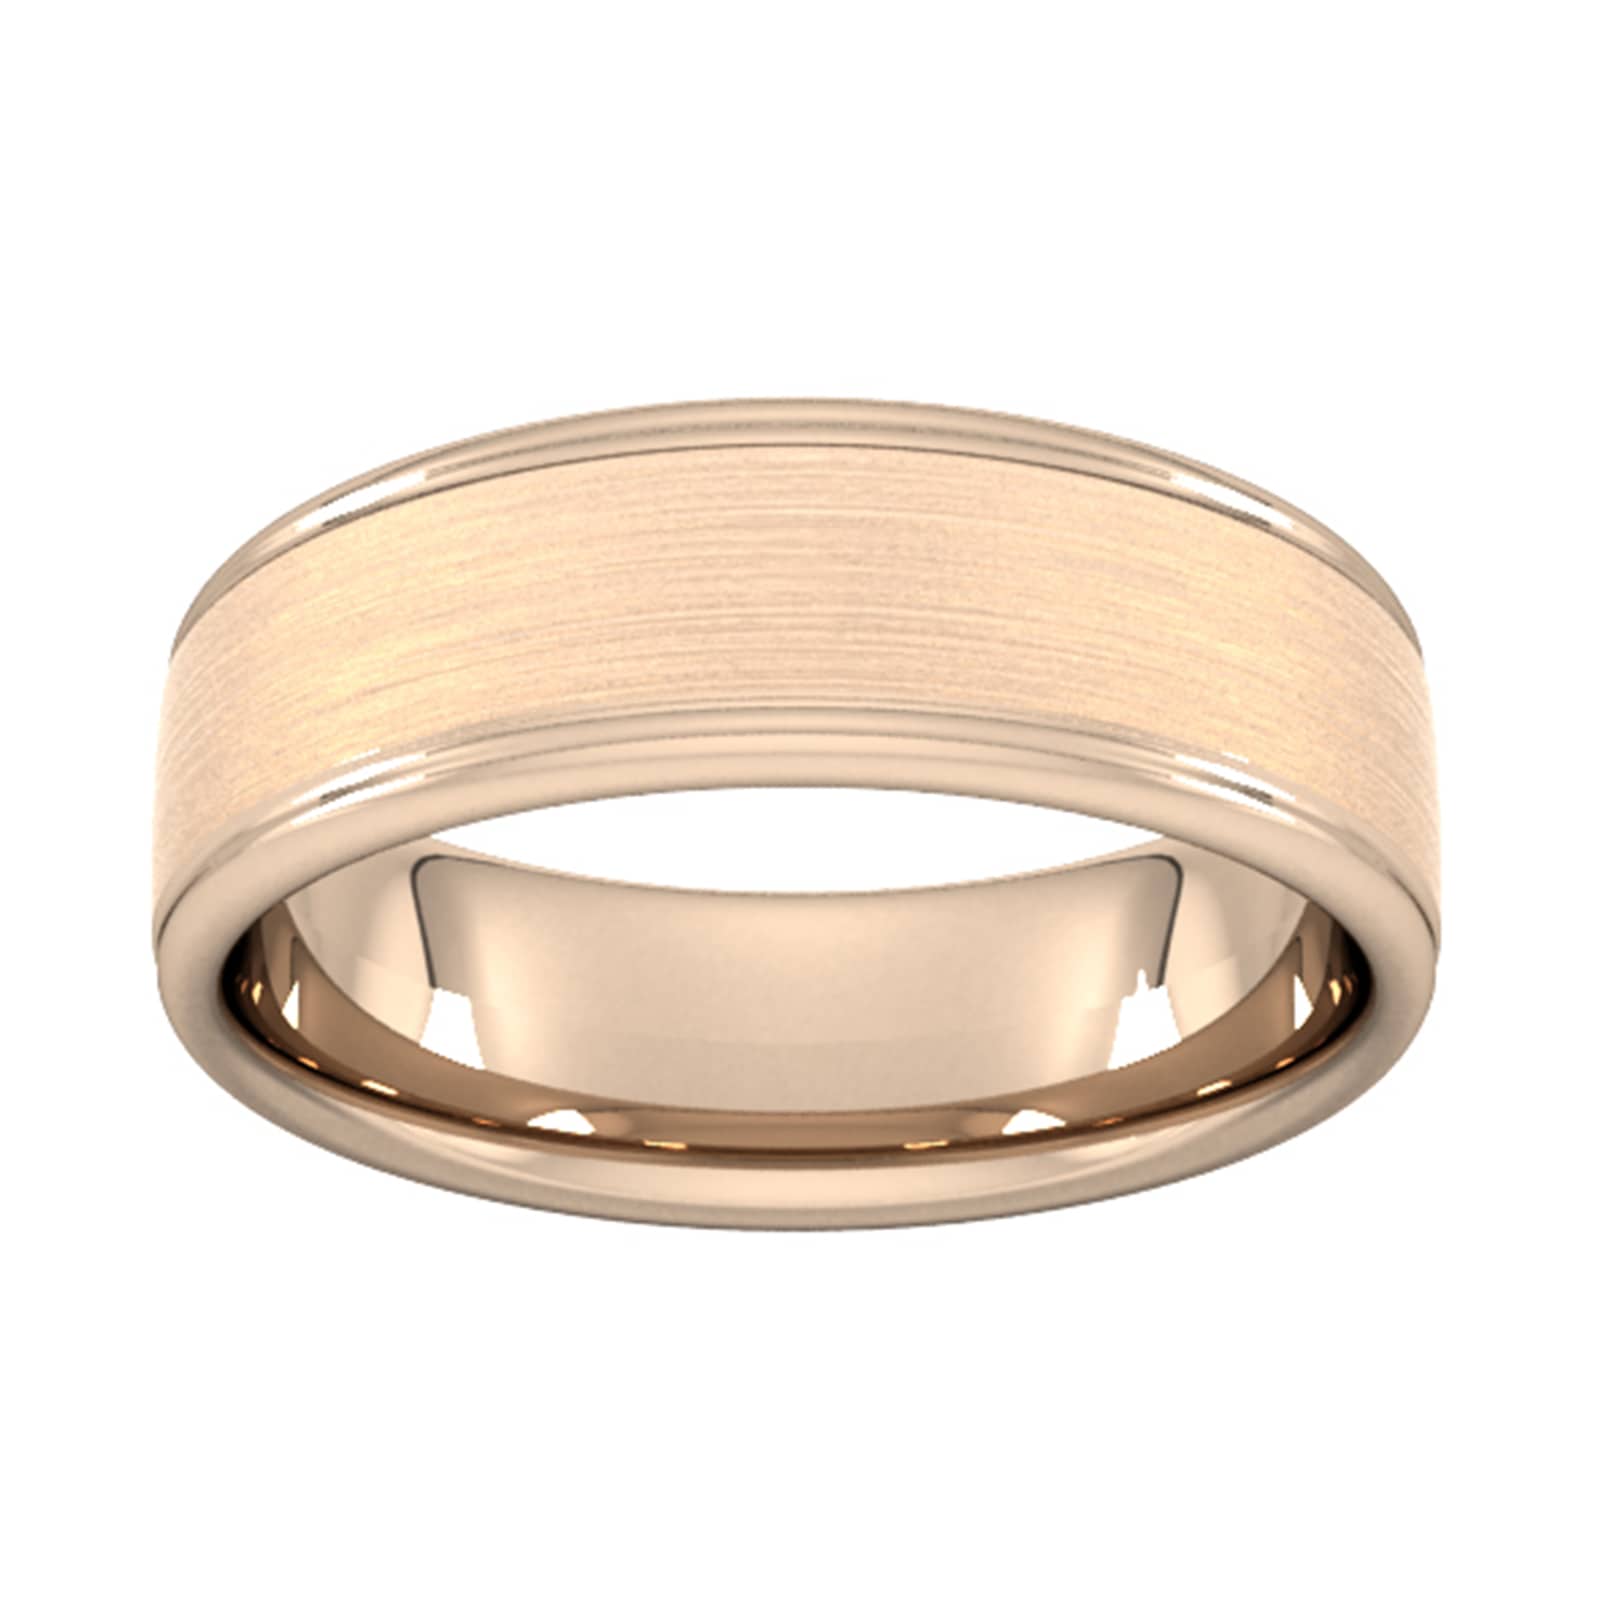 7mm Slight Court Heavy Matt Centre With Grooves Wedding Ring In 9 Carat Rose Gold - Ring Size K